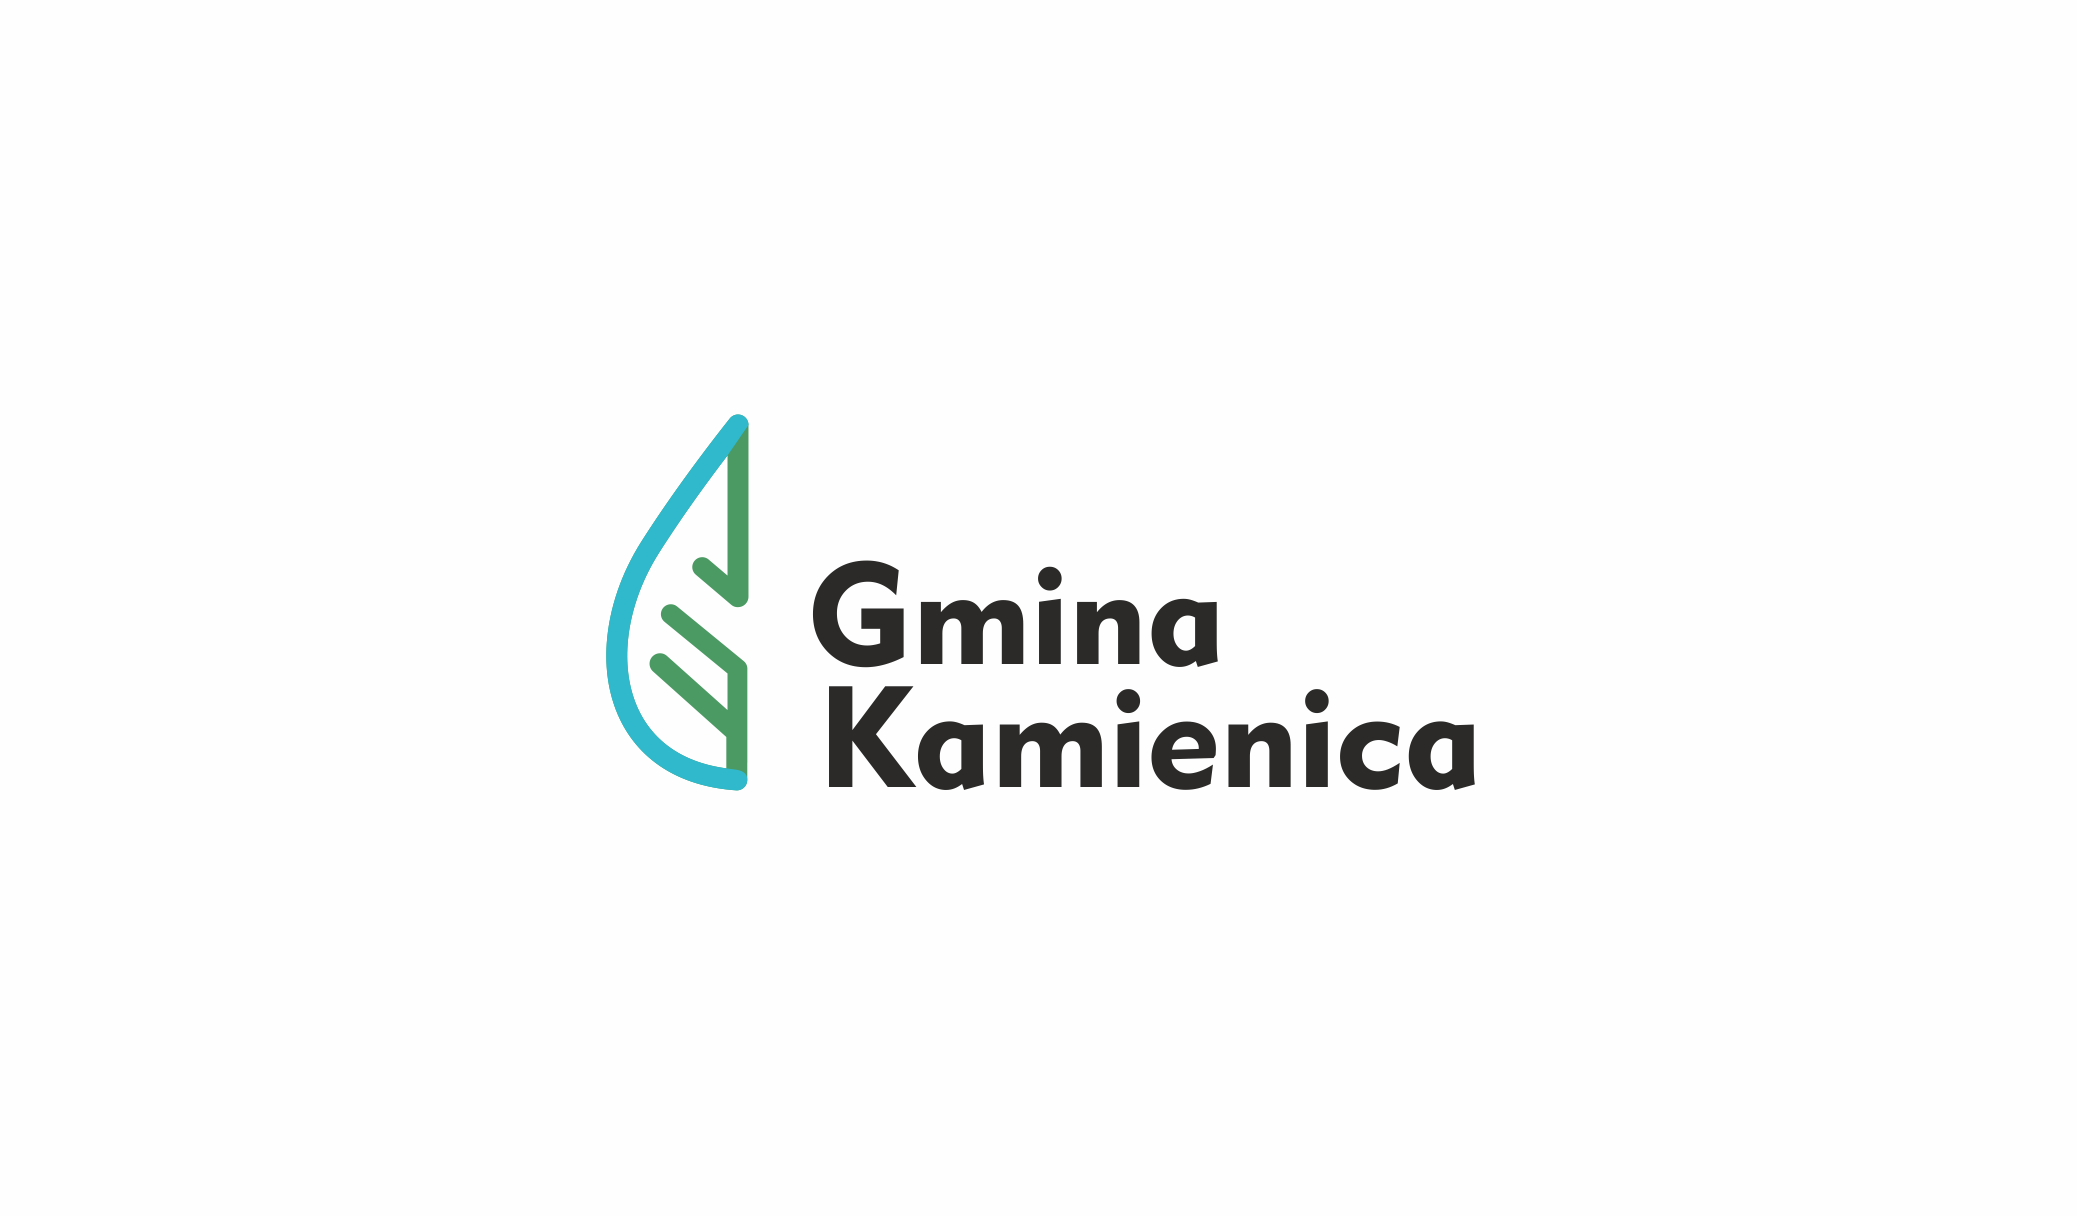 Gmina Kamienica